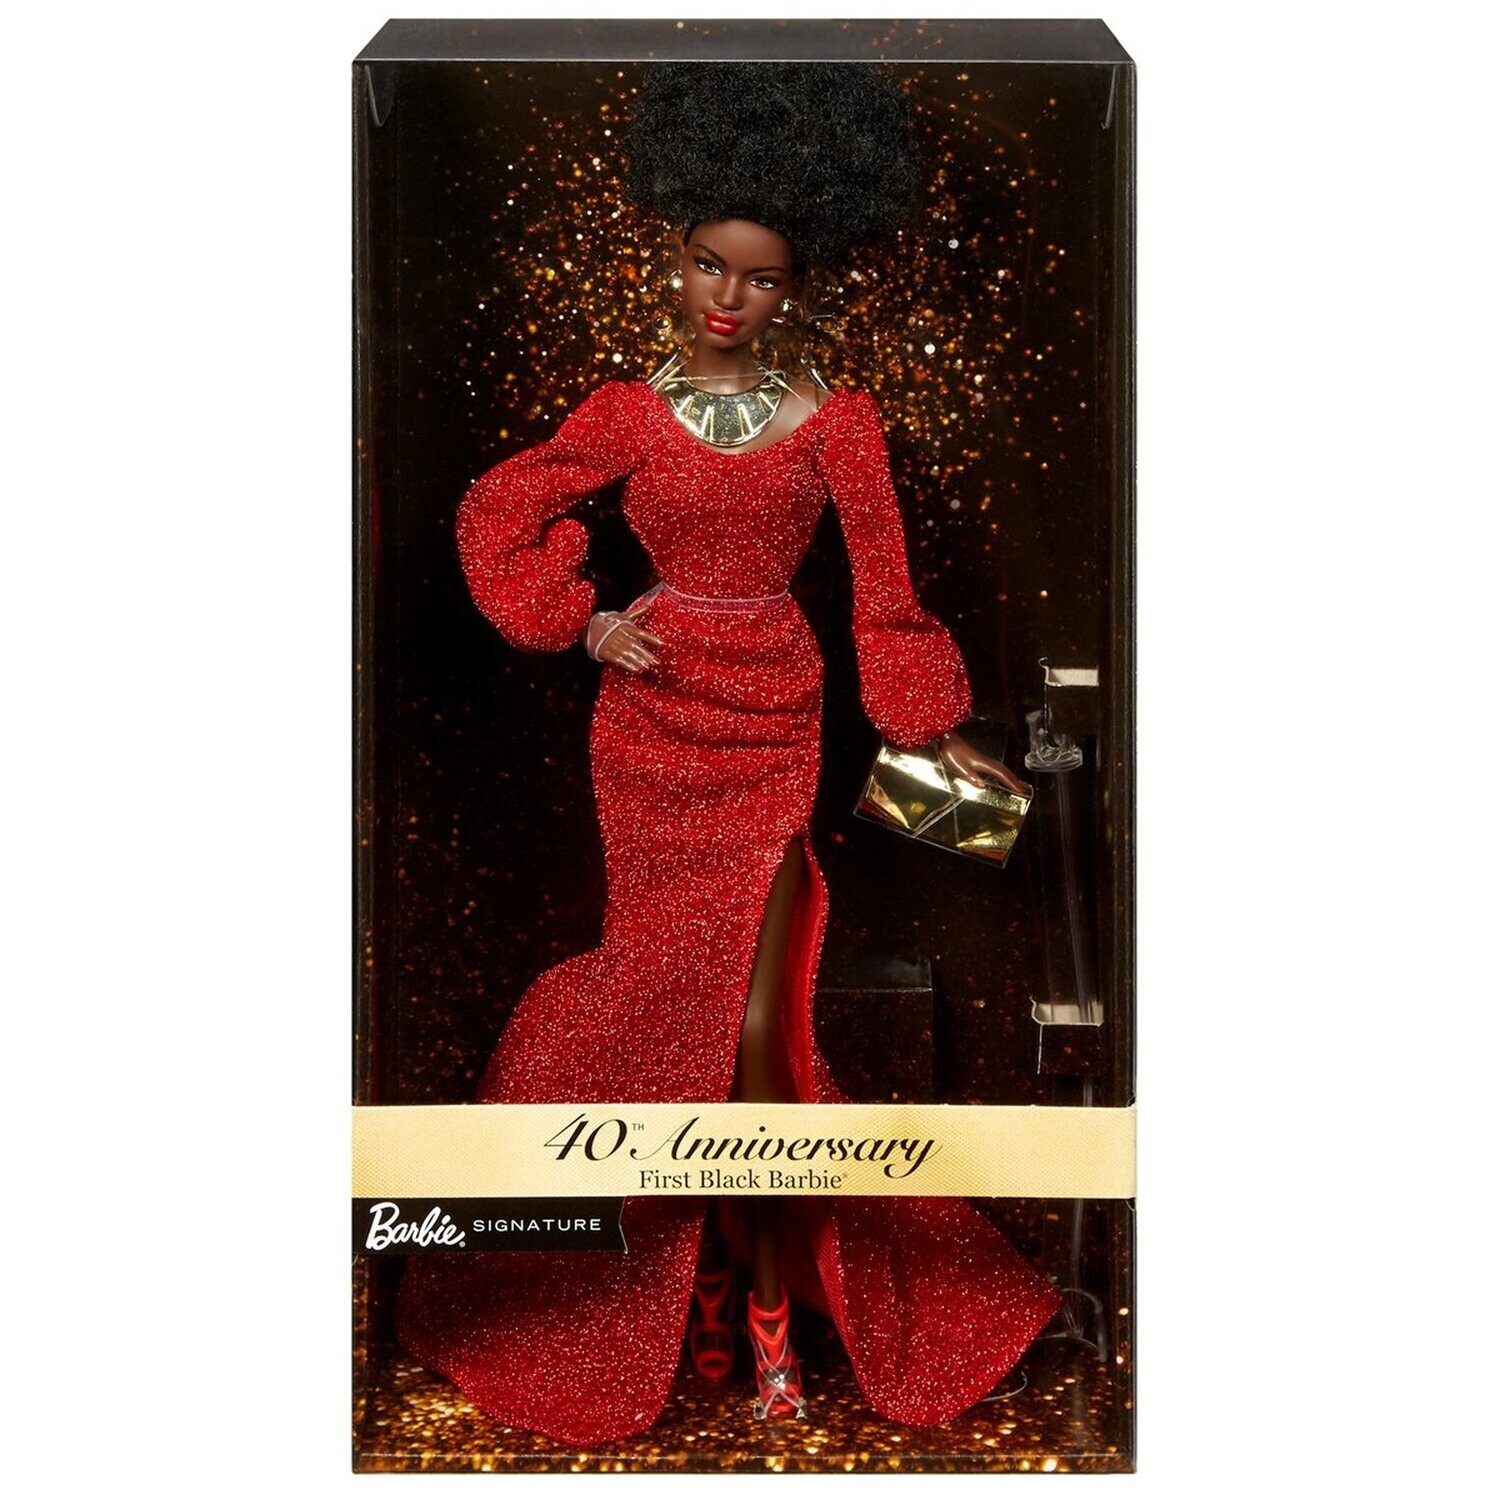 40th Anniversary First Black Barbie